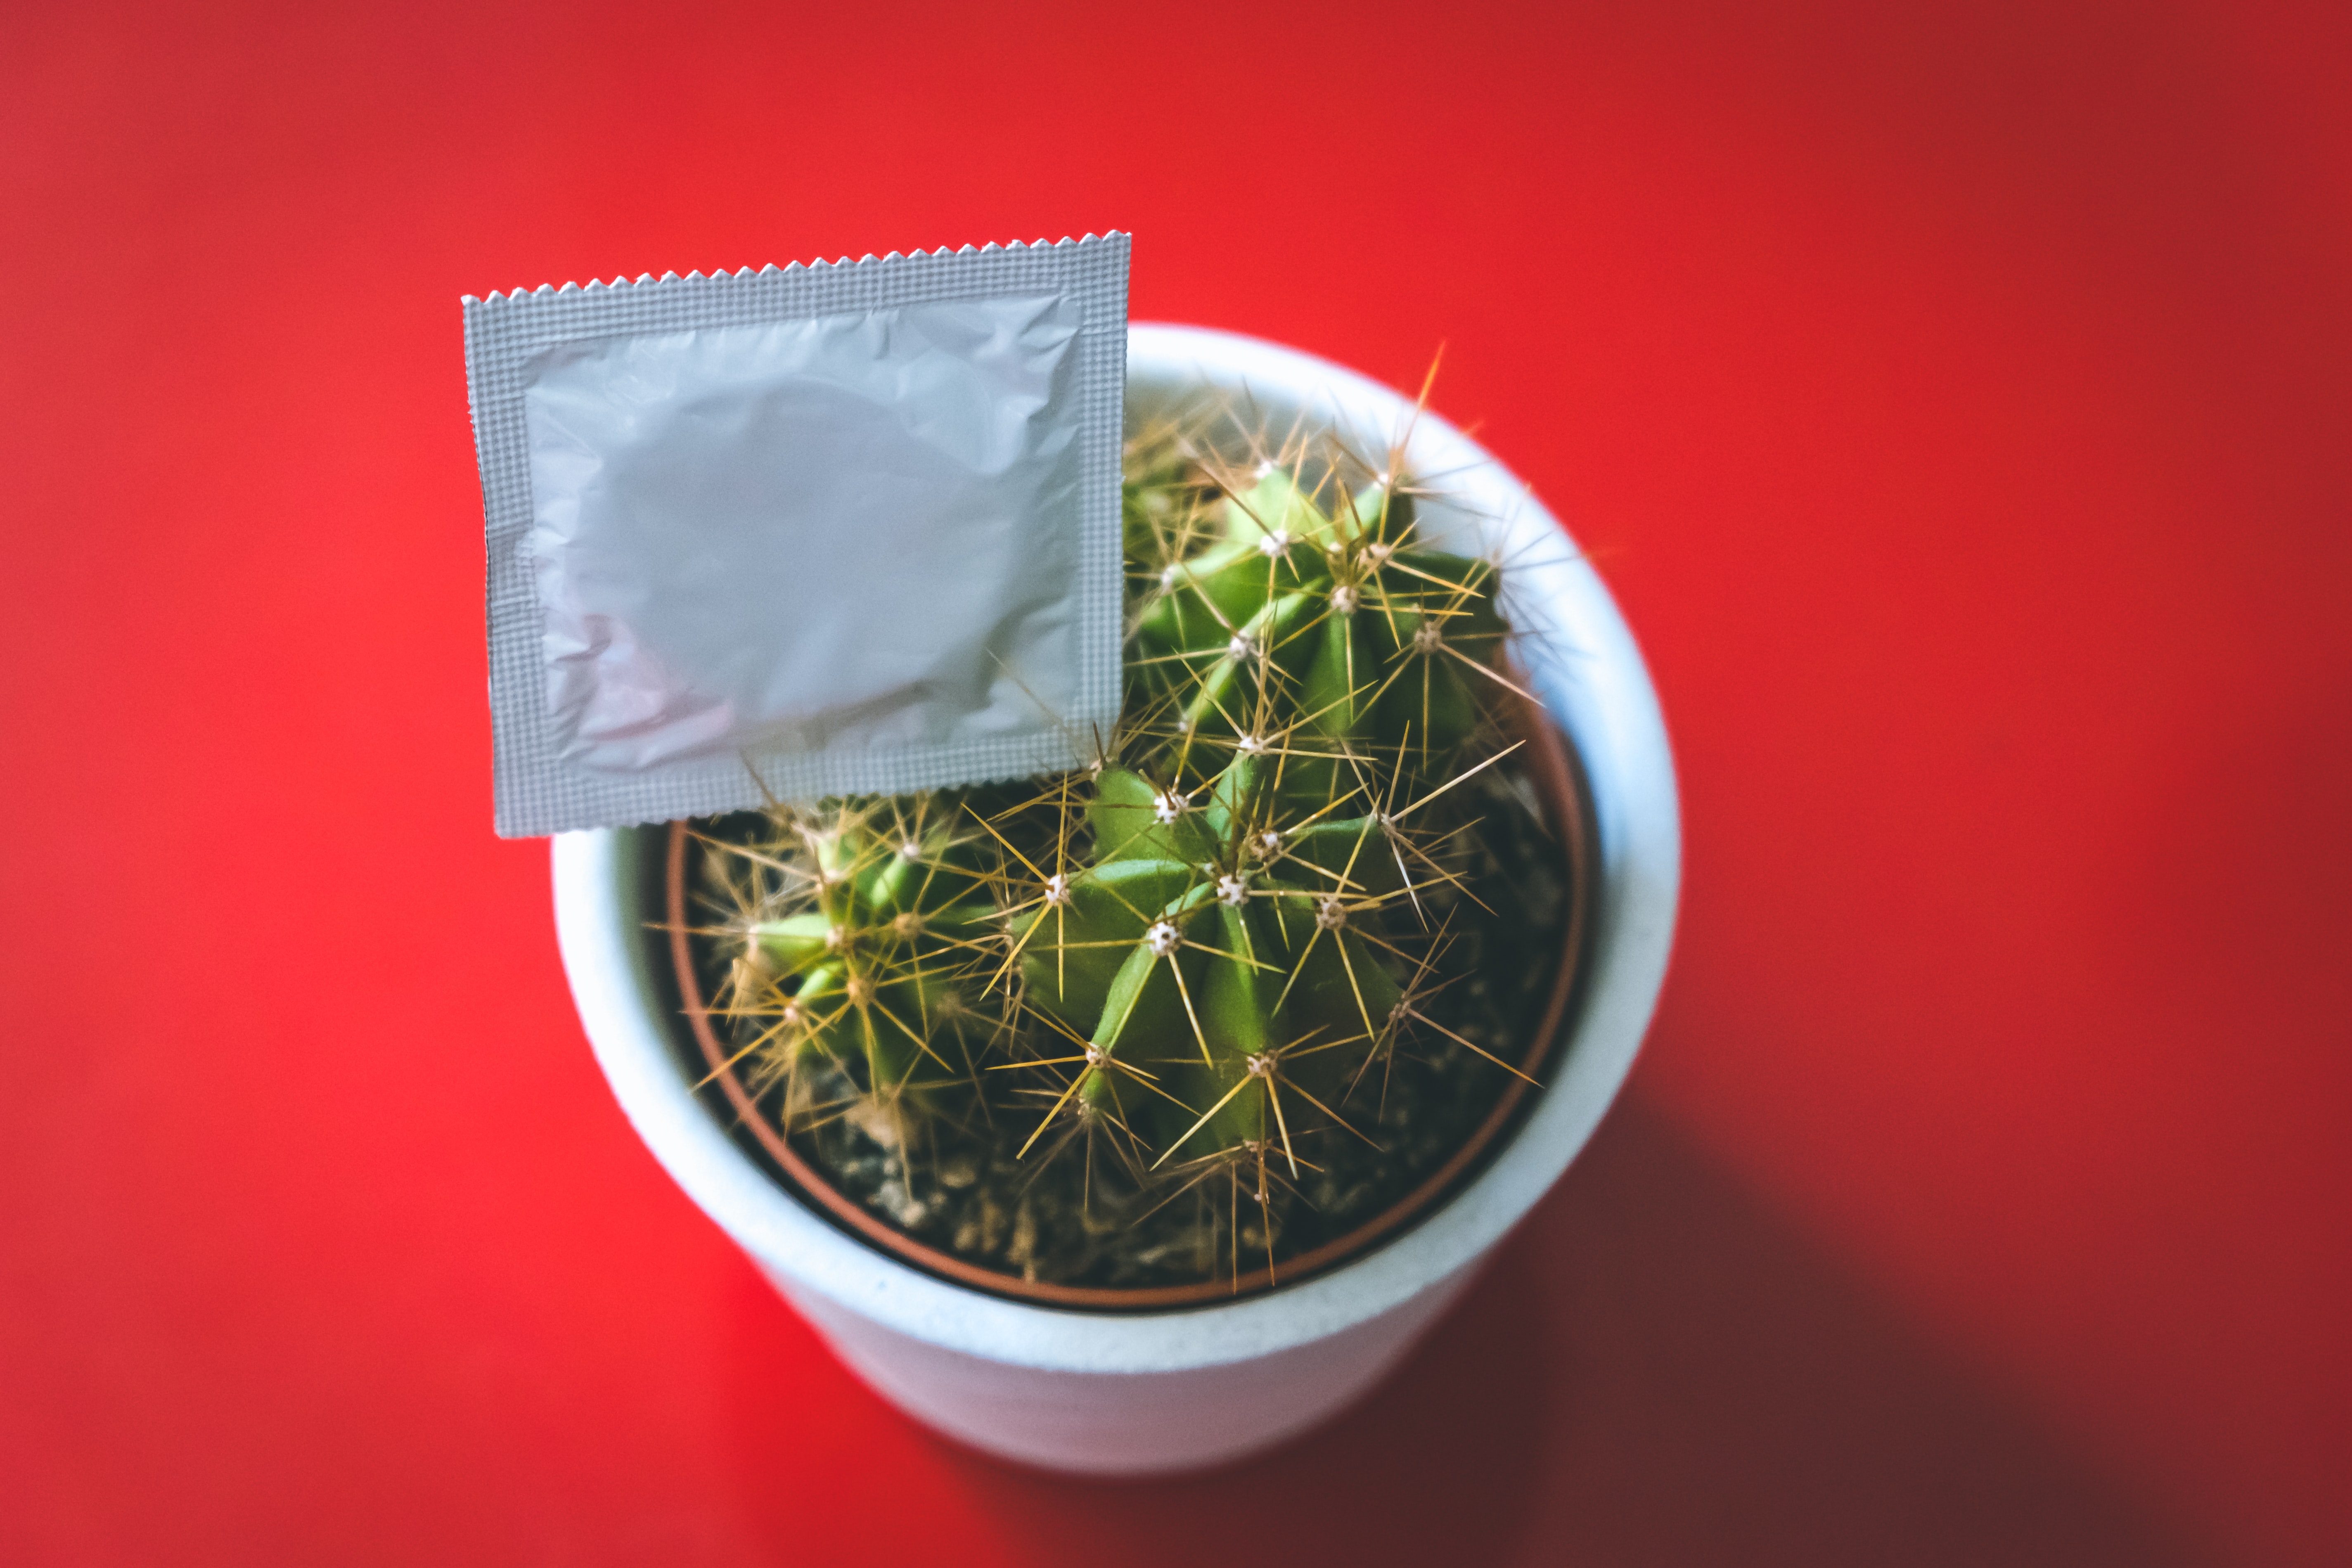 Condom and cactus by Benedikt Geyer (@b_g) on Unsplash